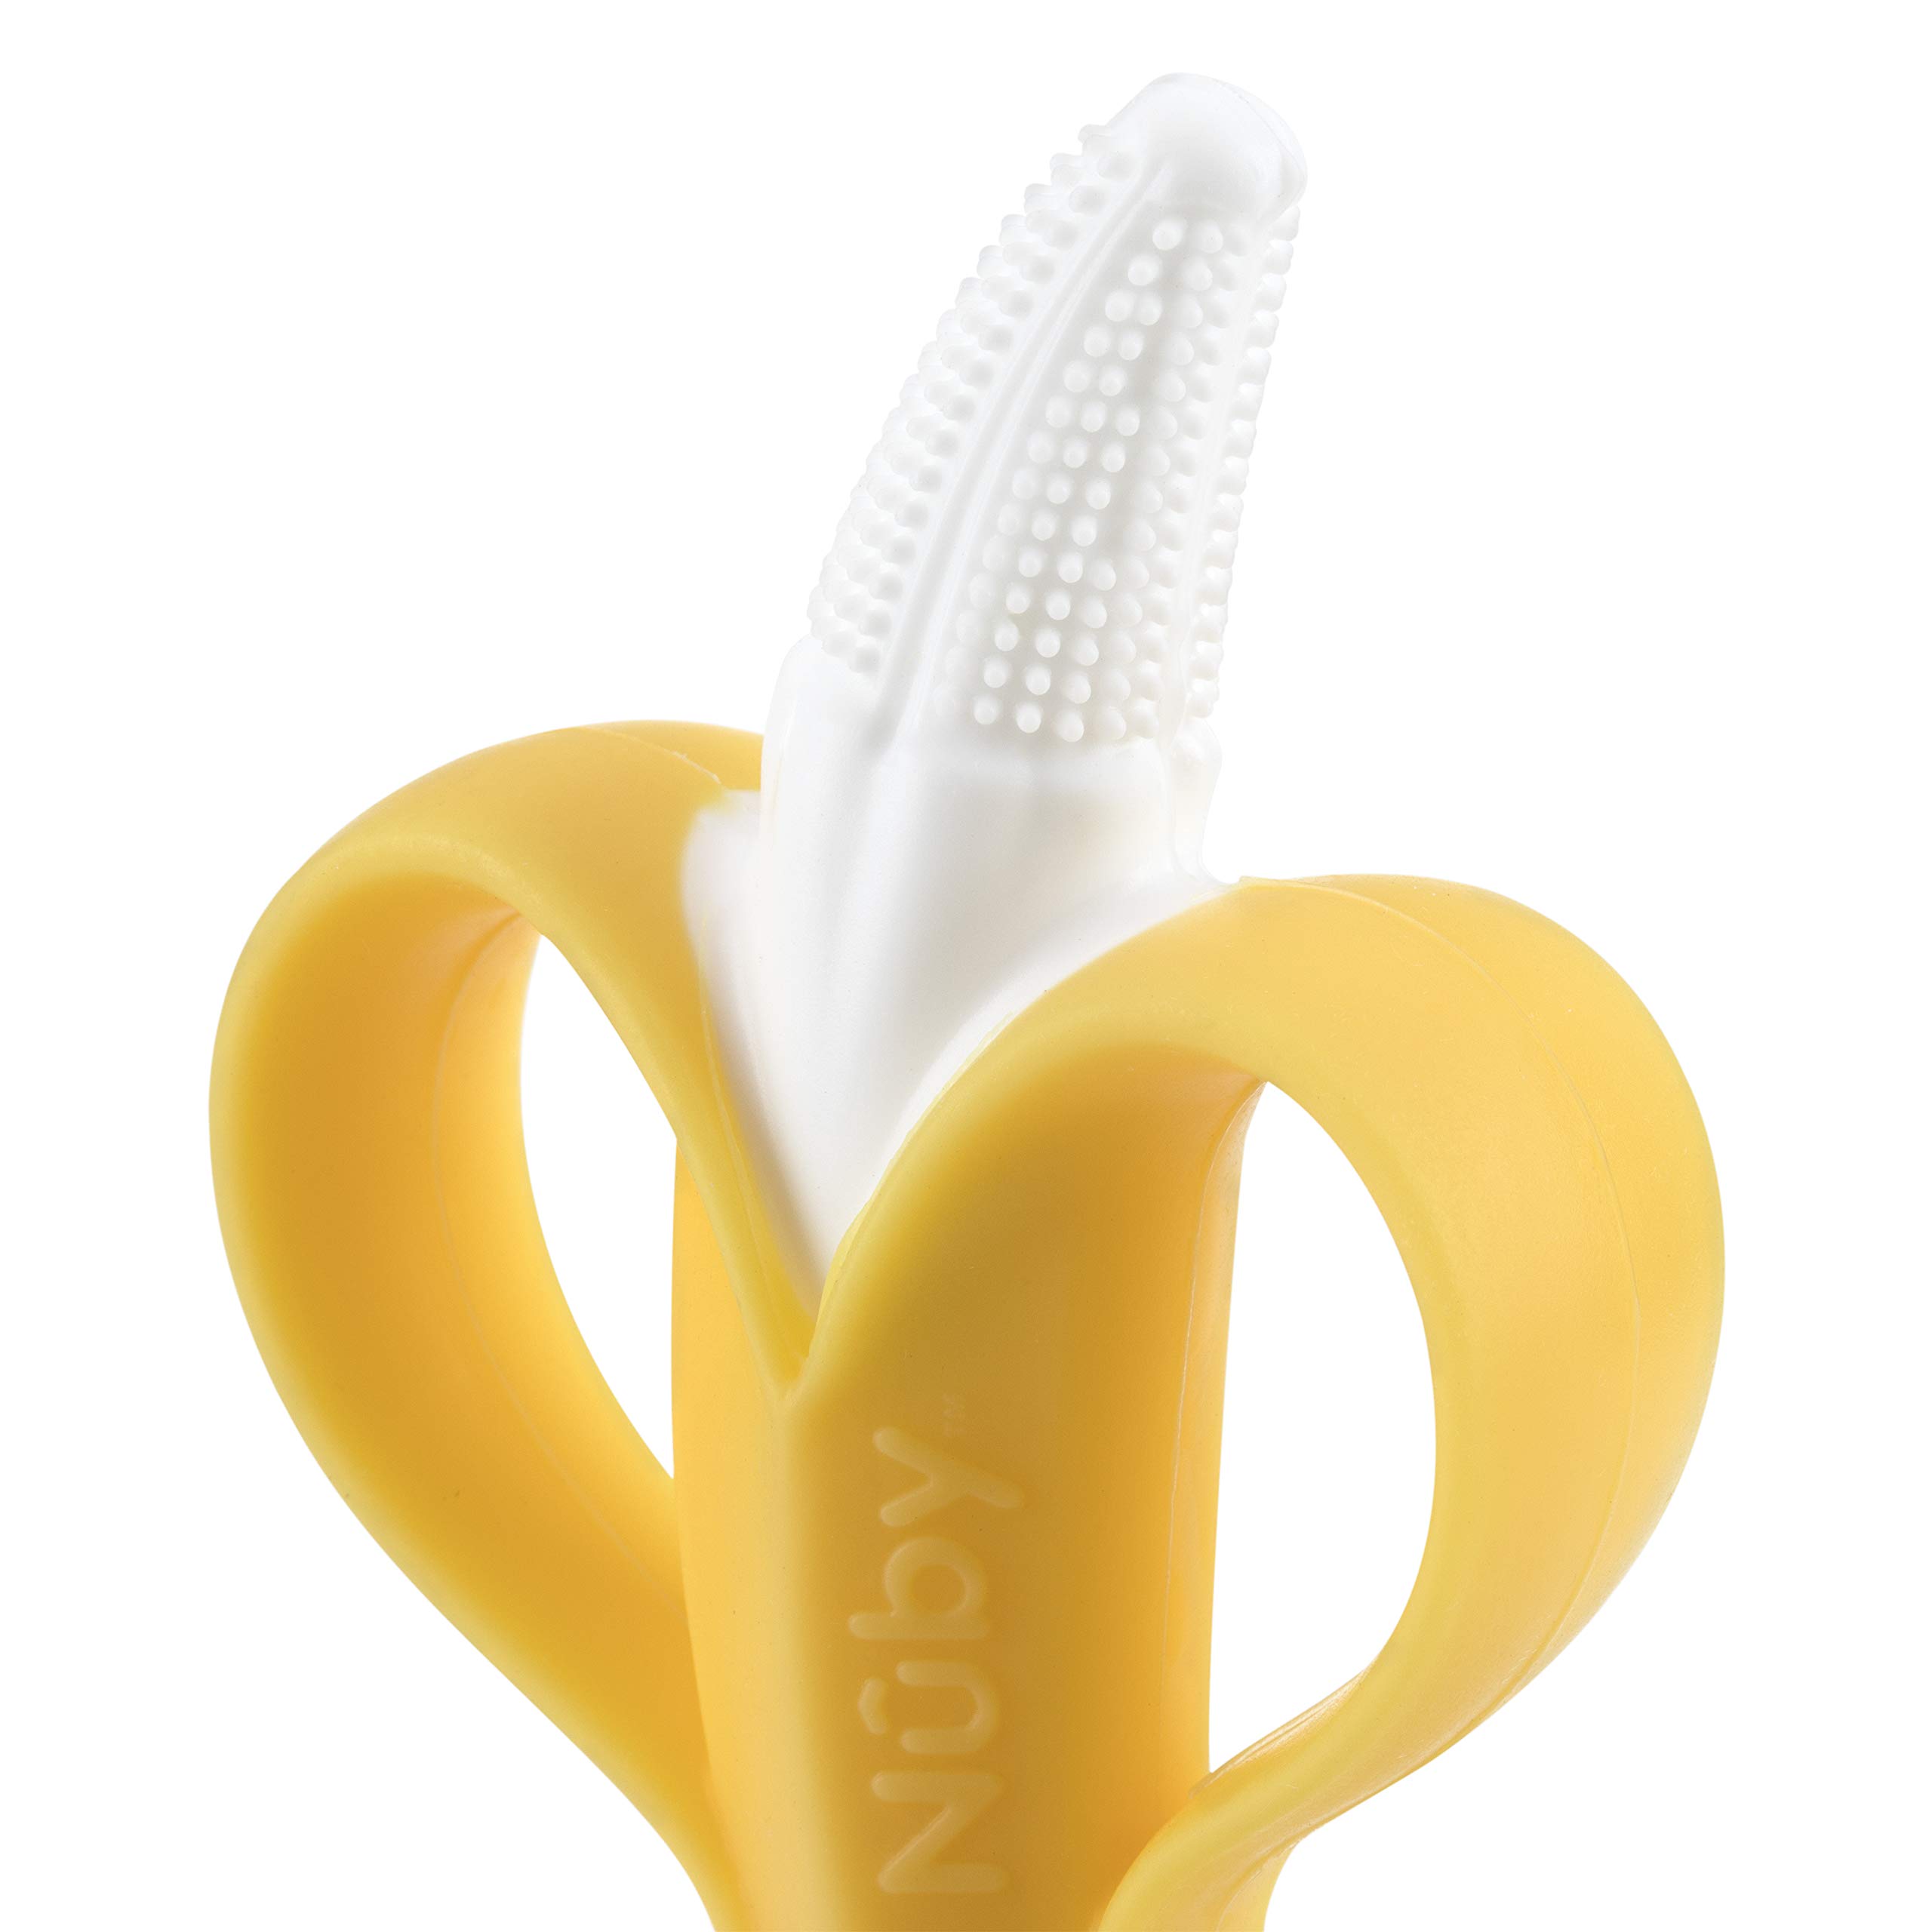 Nuby Ice Gel Teether Keys & Nananubs Banana Massaging Toothbrush, Yellow